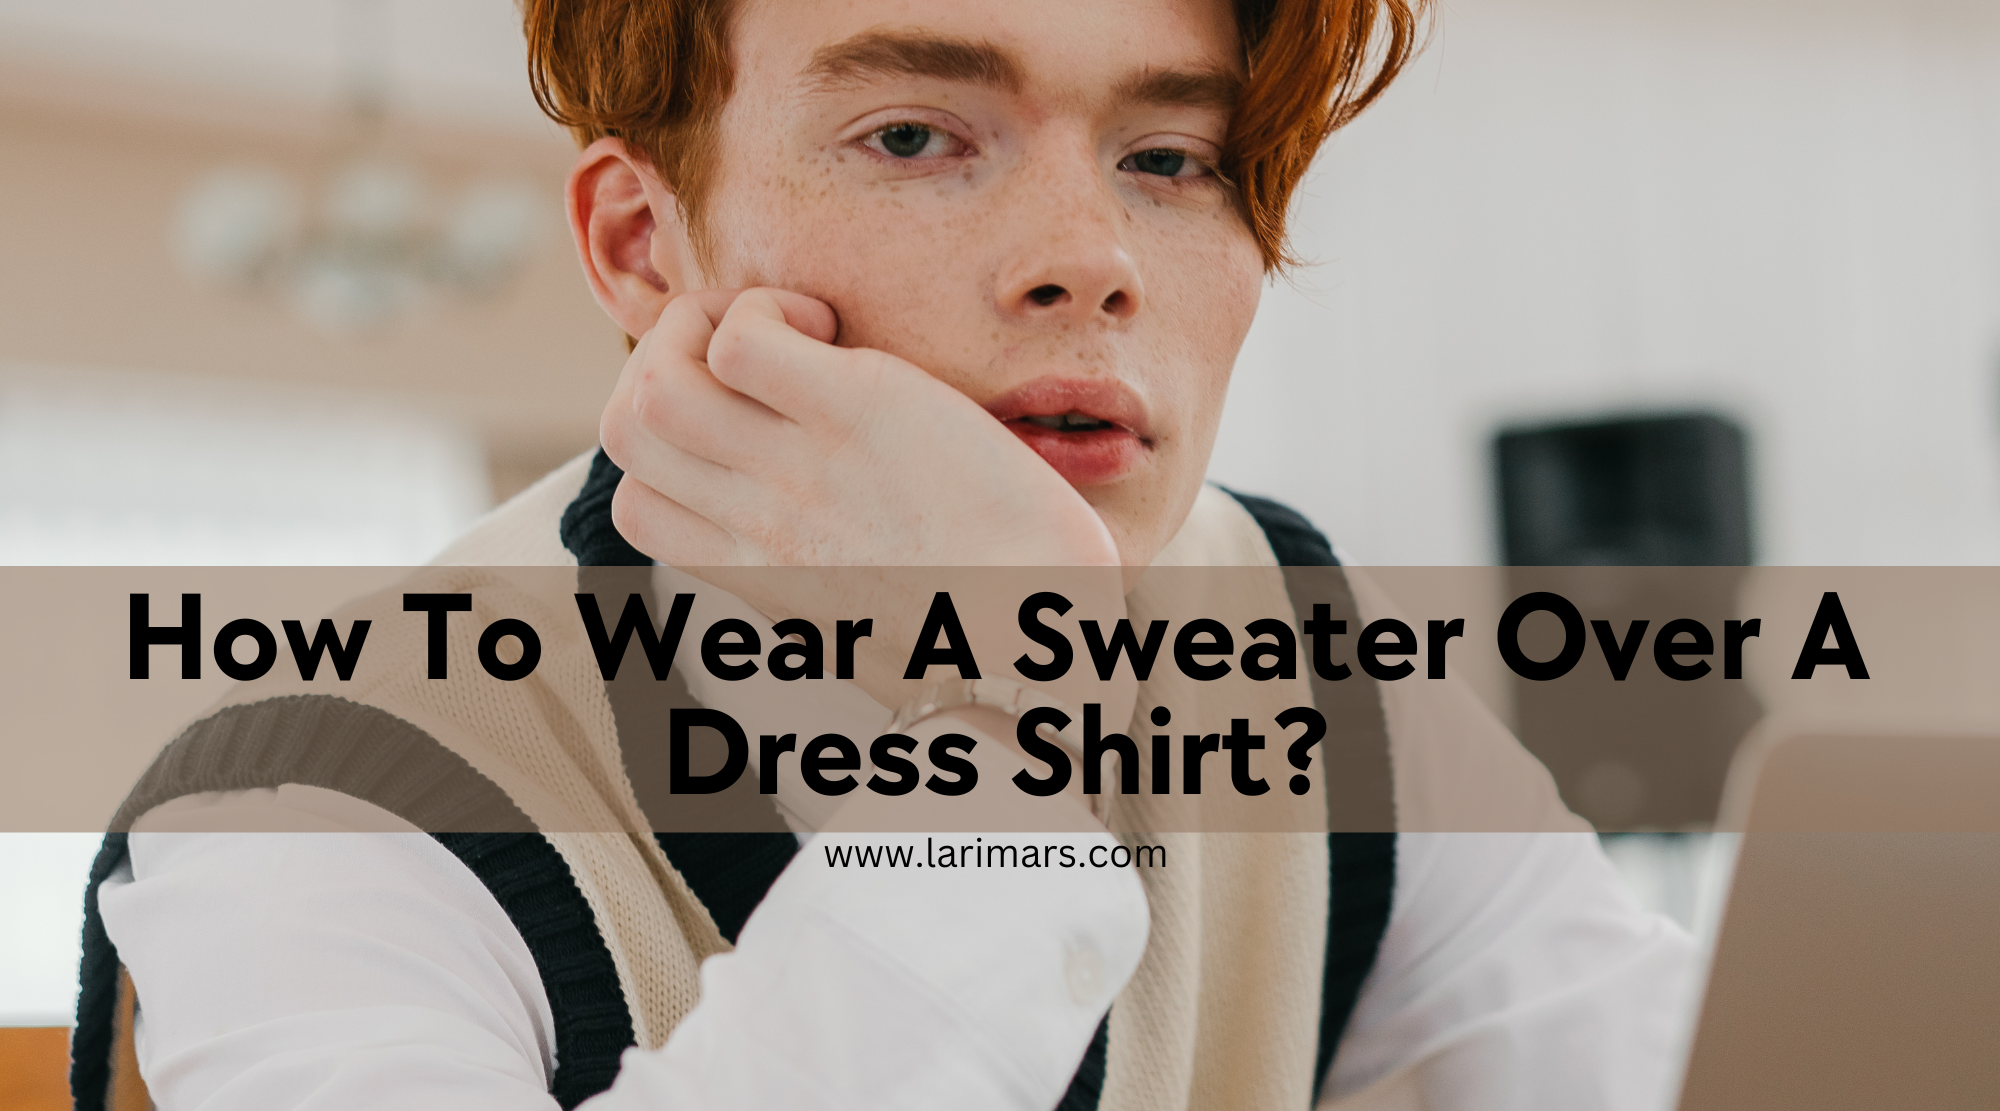 Young boy wearing sweater over dress shirt